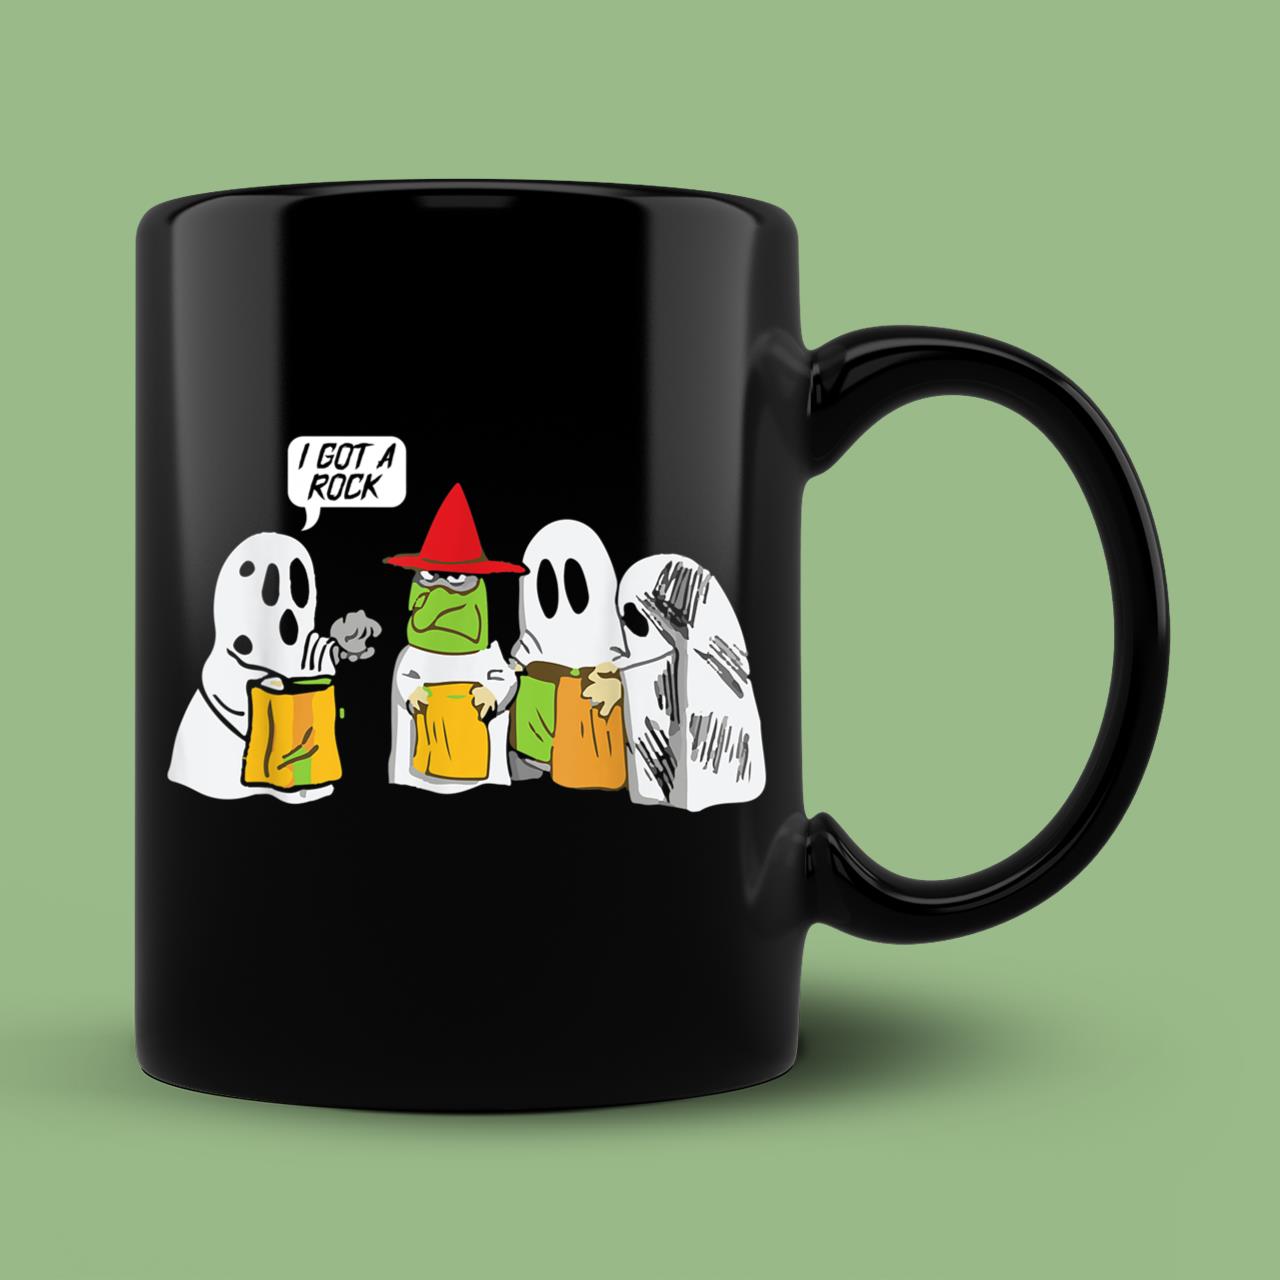 Skitongift Ceramic Novelty Coffee Mug Trick Or Treat Lazy Spooky Halloween Shirt Funny Mug